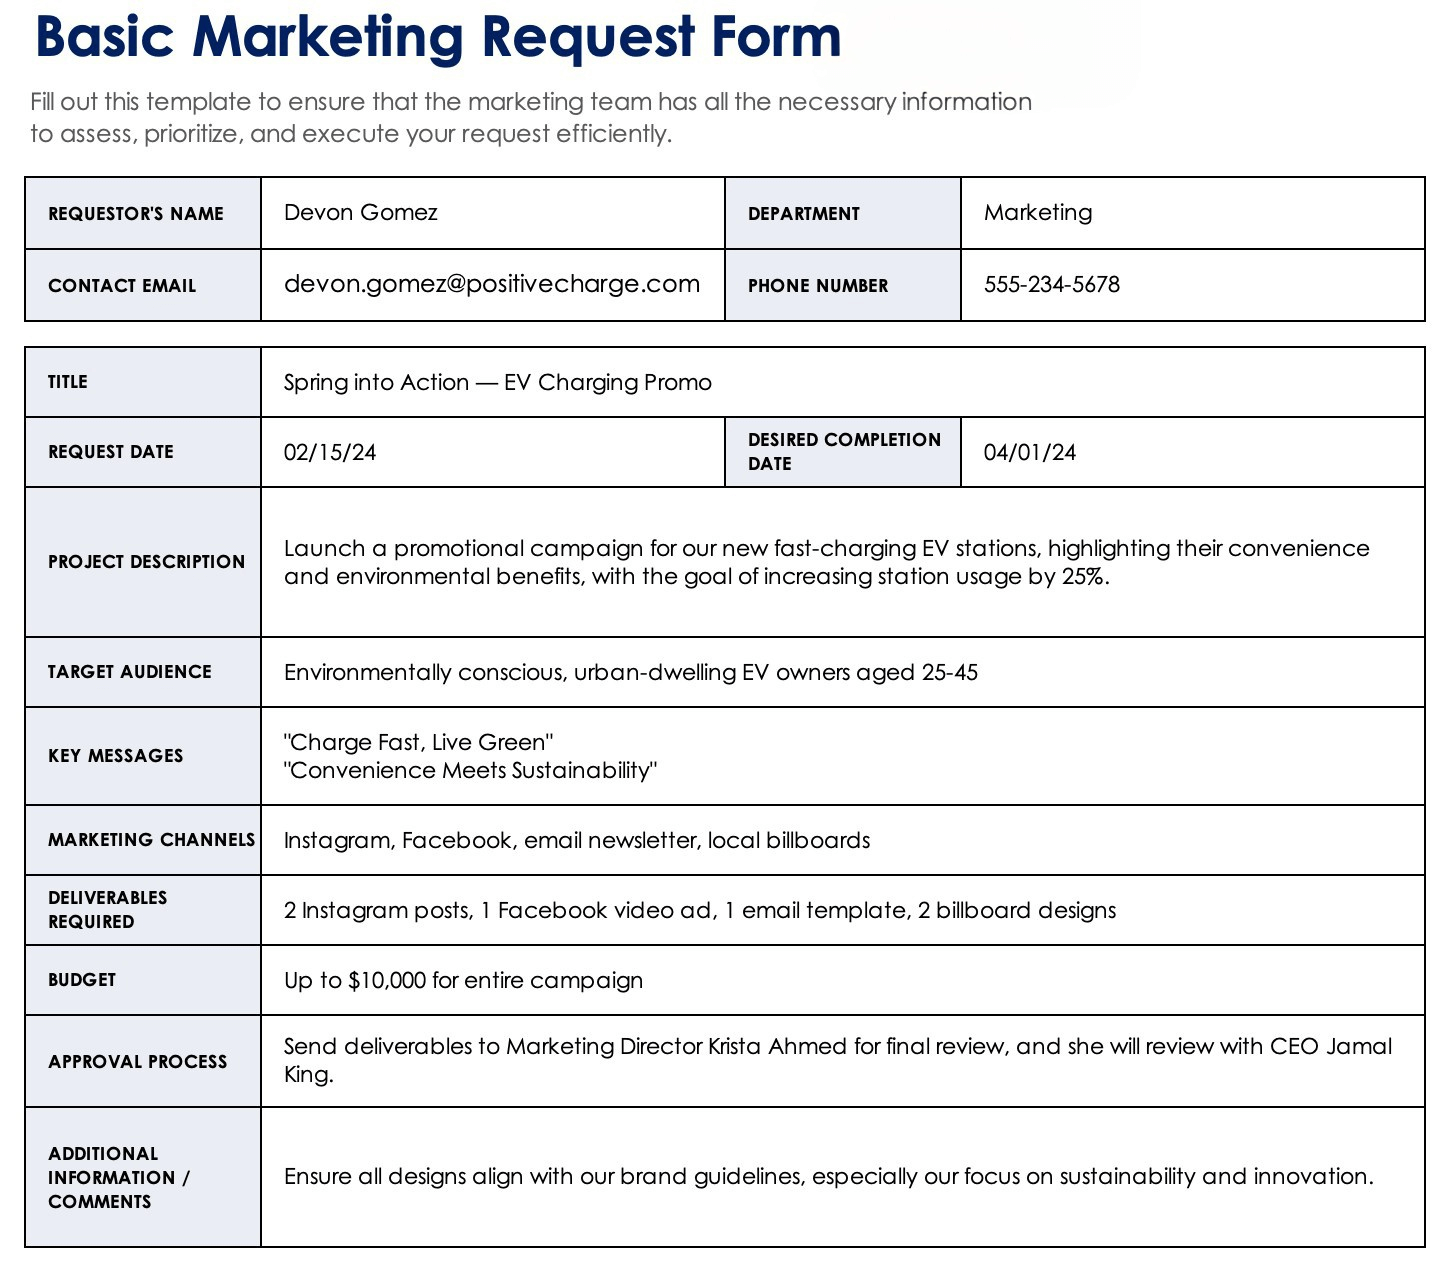 Basic Marketing Request Form